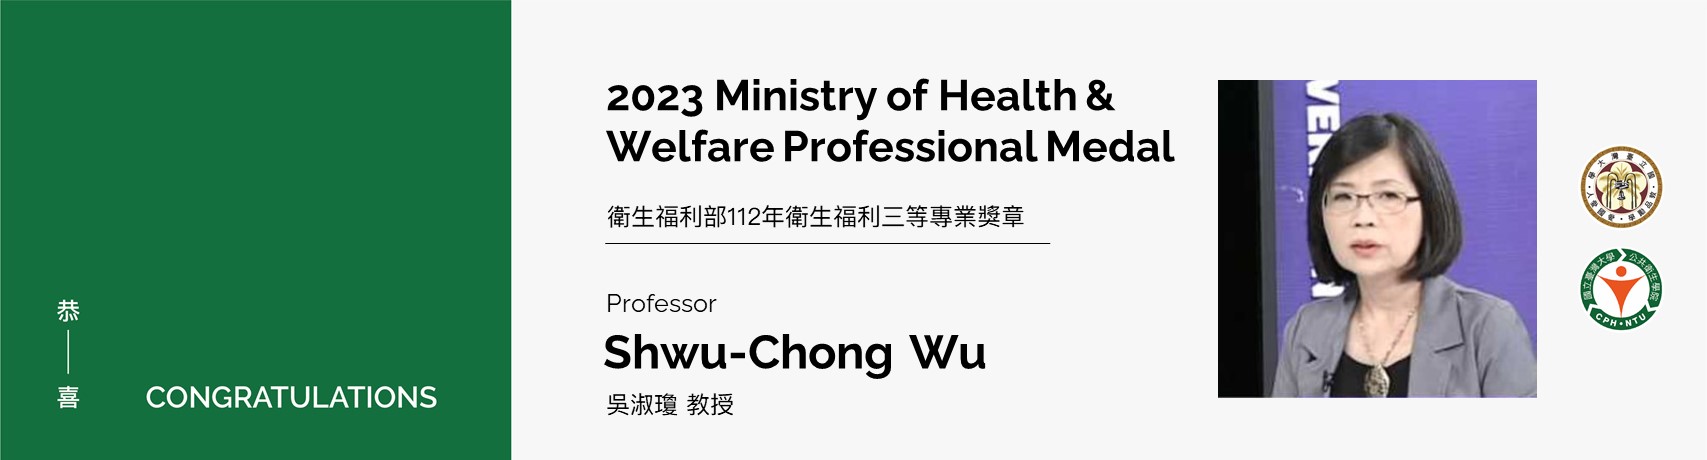 【Congratulations!】Prof. Shwu-Chong Wu awarded 2023 Ministry of Health & Welfare Professional Medal